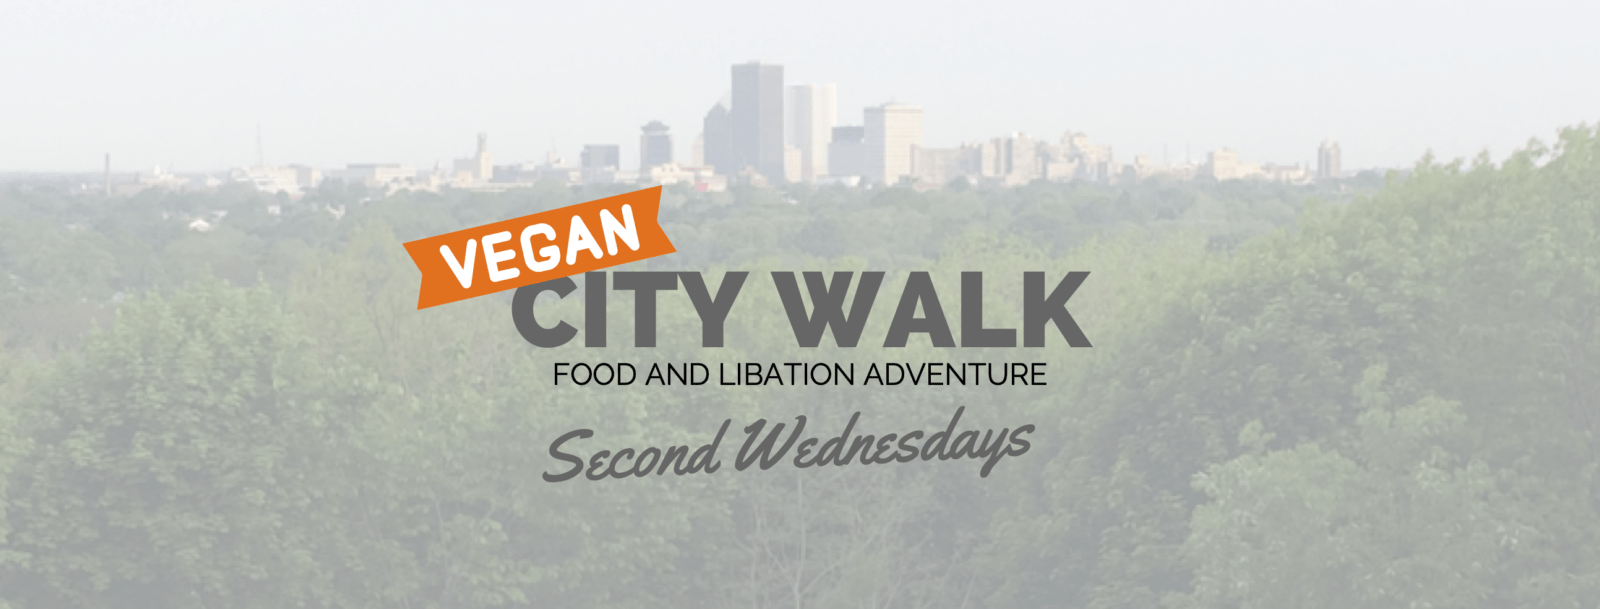 vegan city walk graphic